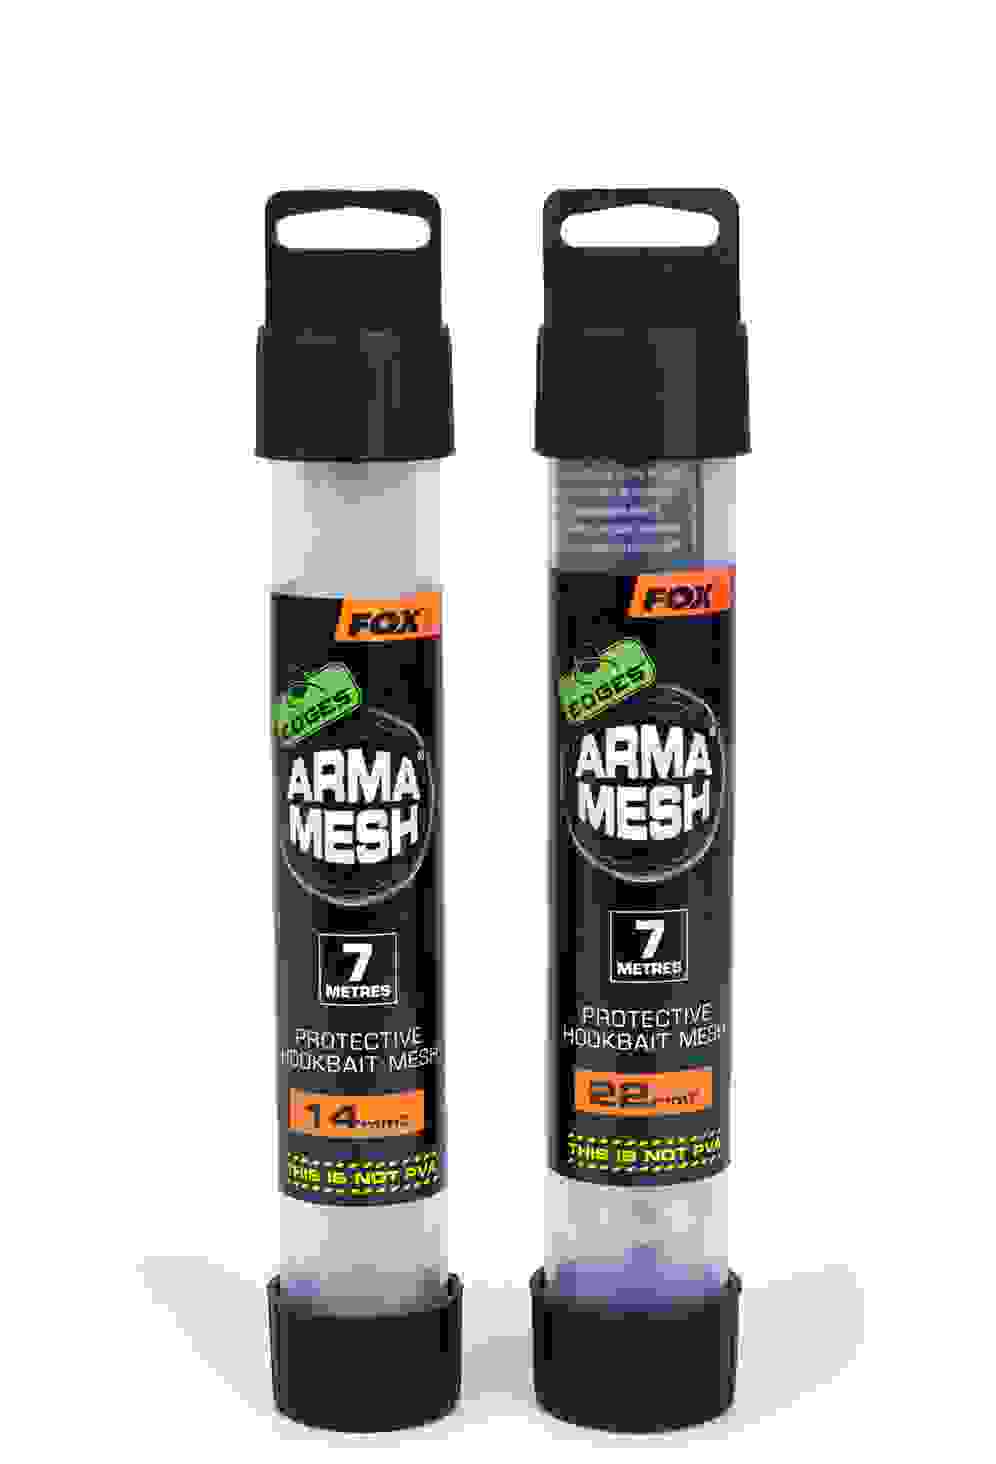 arma-mesh_14mm-22mmjpg